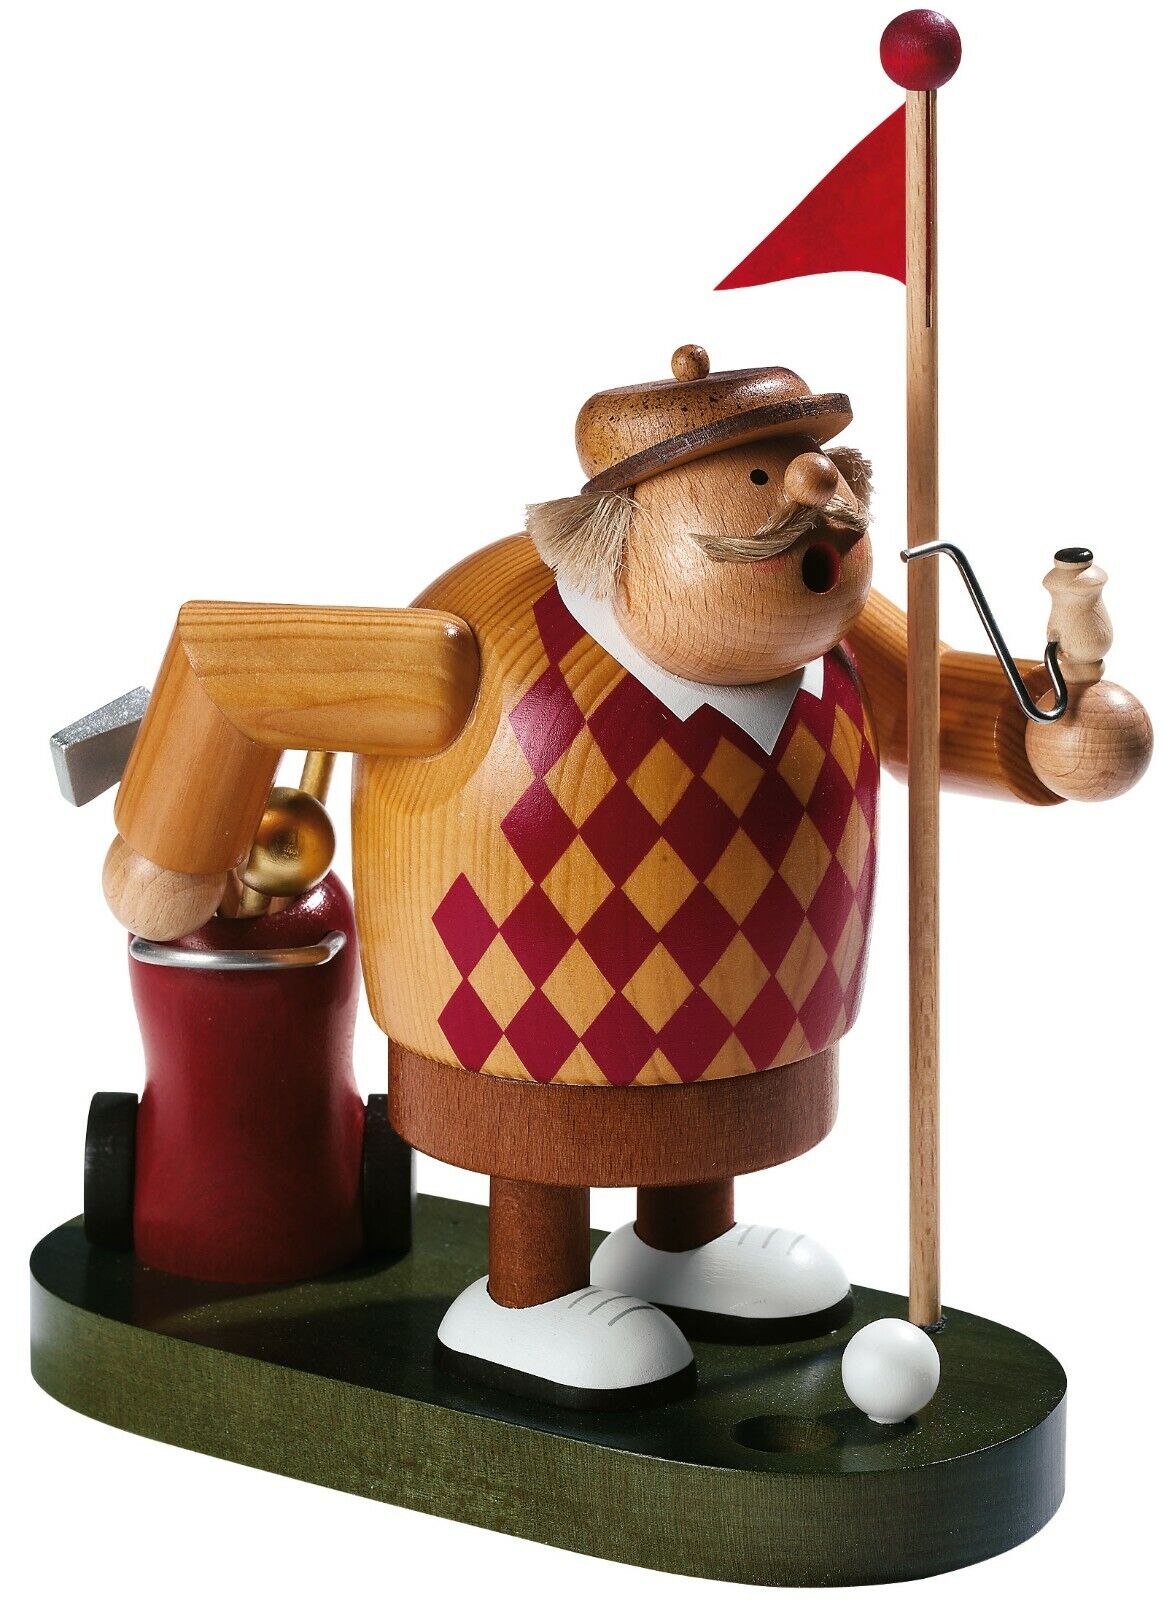 NEW IN BOX - KWO Golfer - German Christmas Smoker / Incense Burner